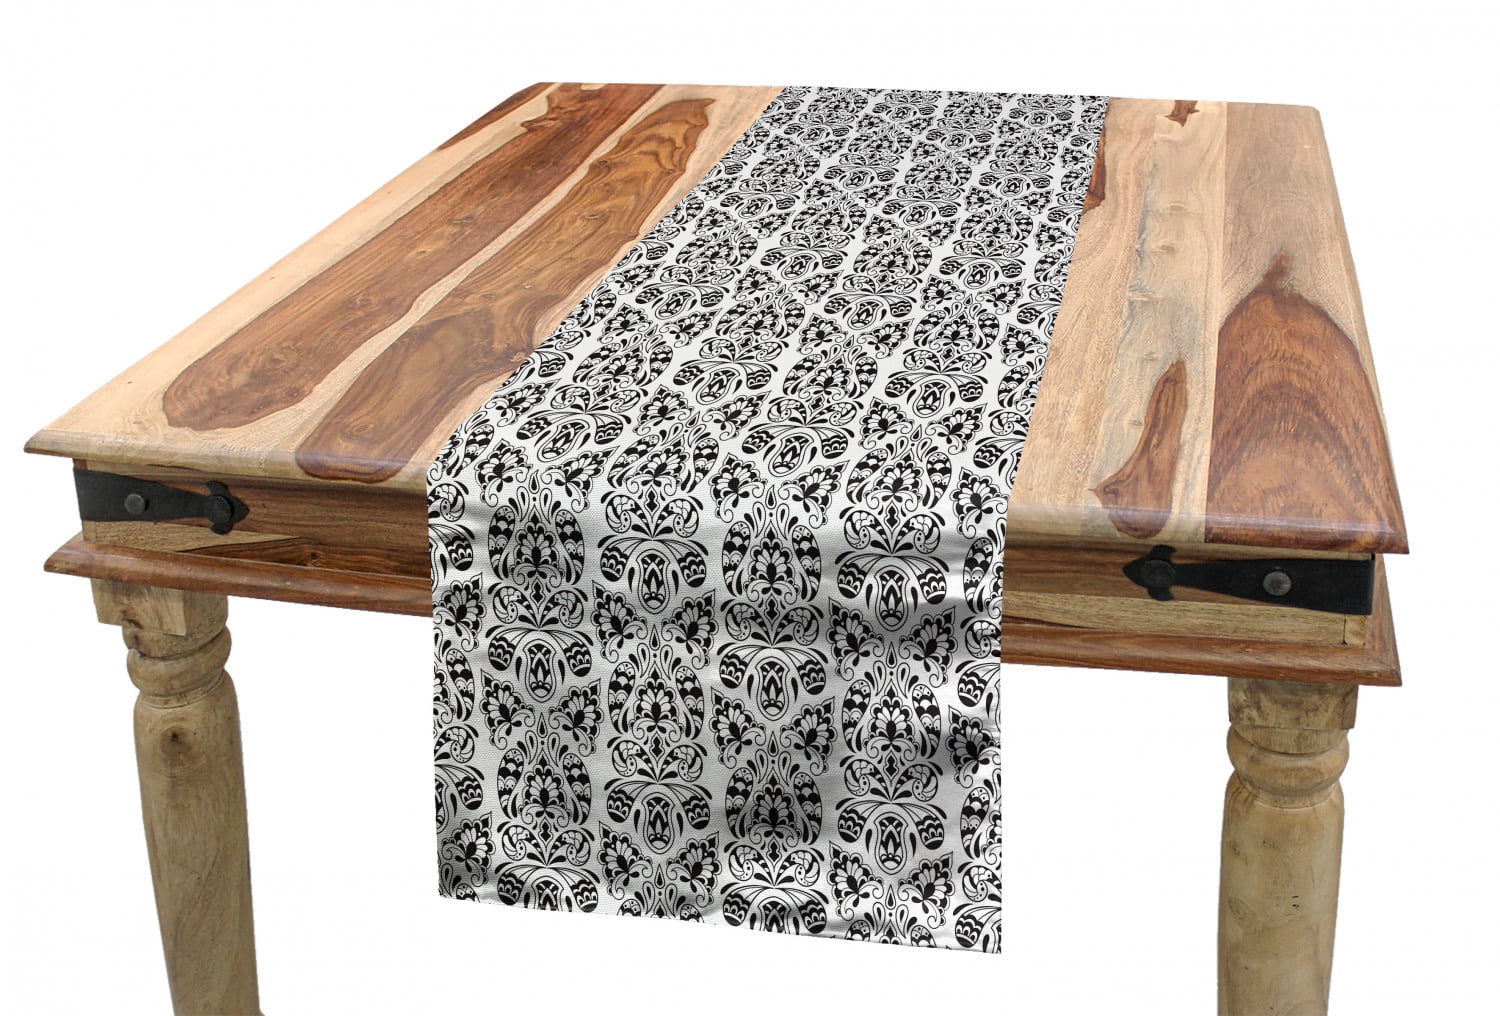 Details about   Elegant Paisley Design Tablecloth Square & Rectangular Home Party Decoration 